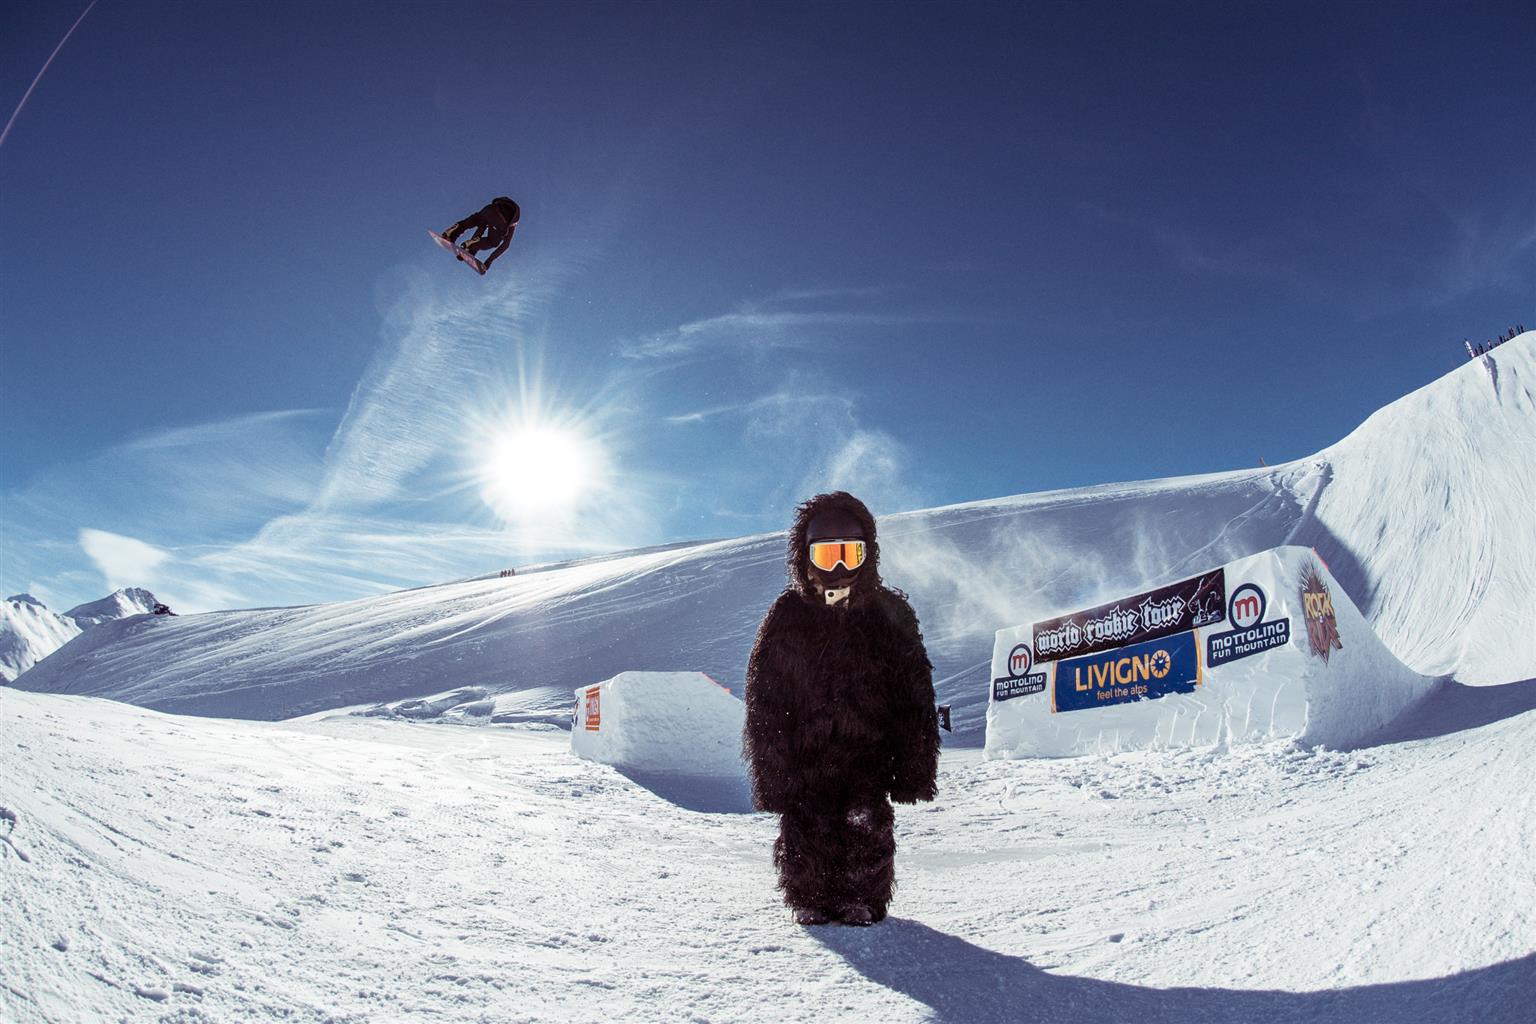 Livigno ski resort snowy landscape with people snowboarding winter sports